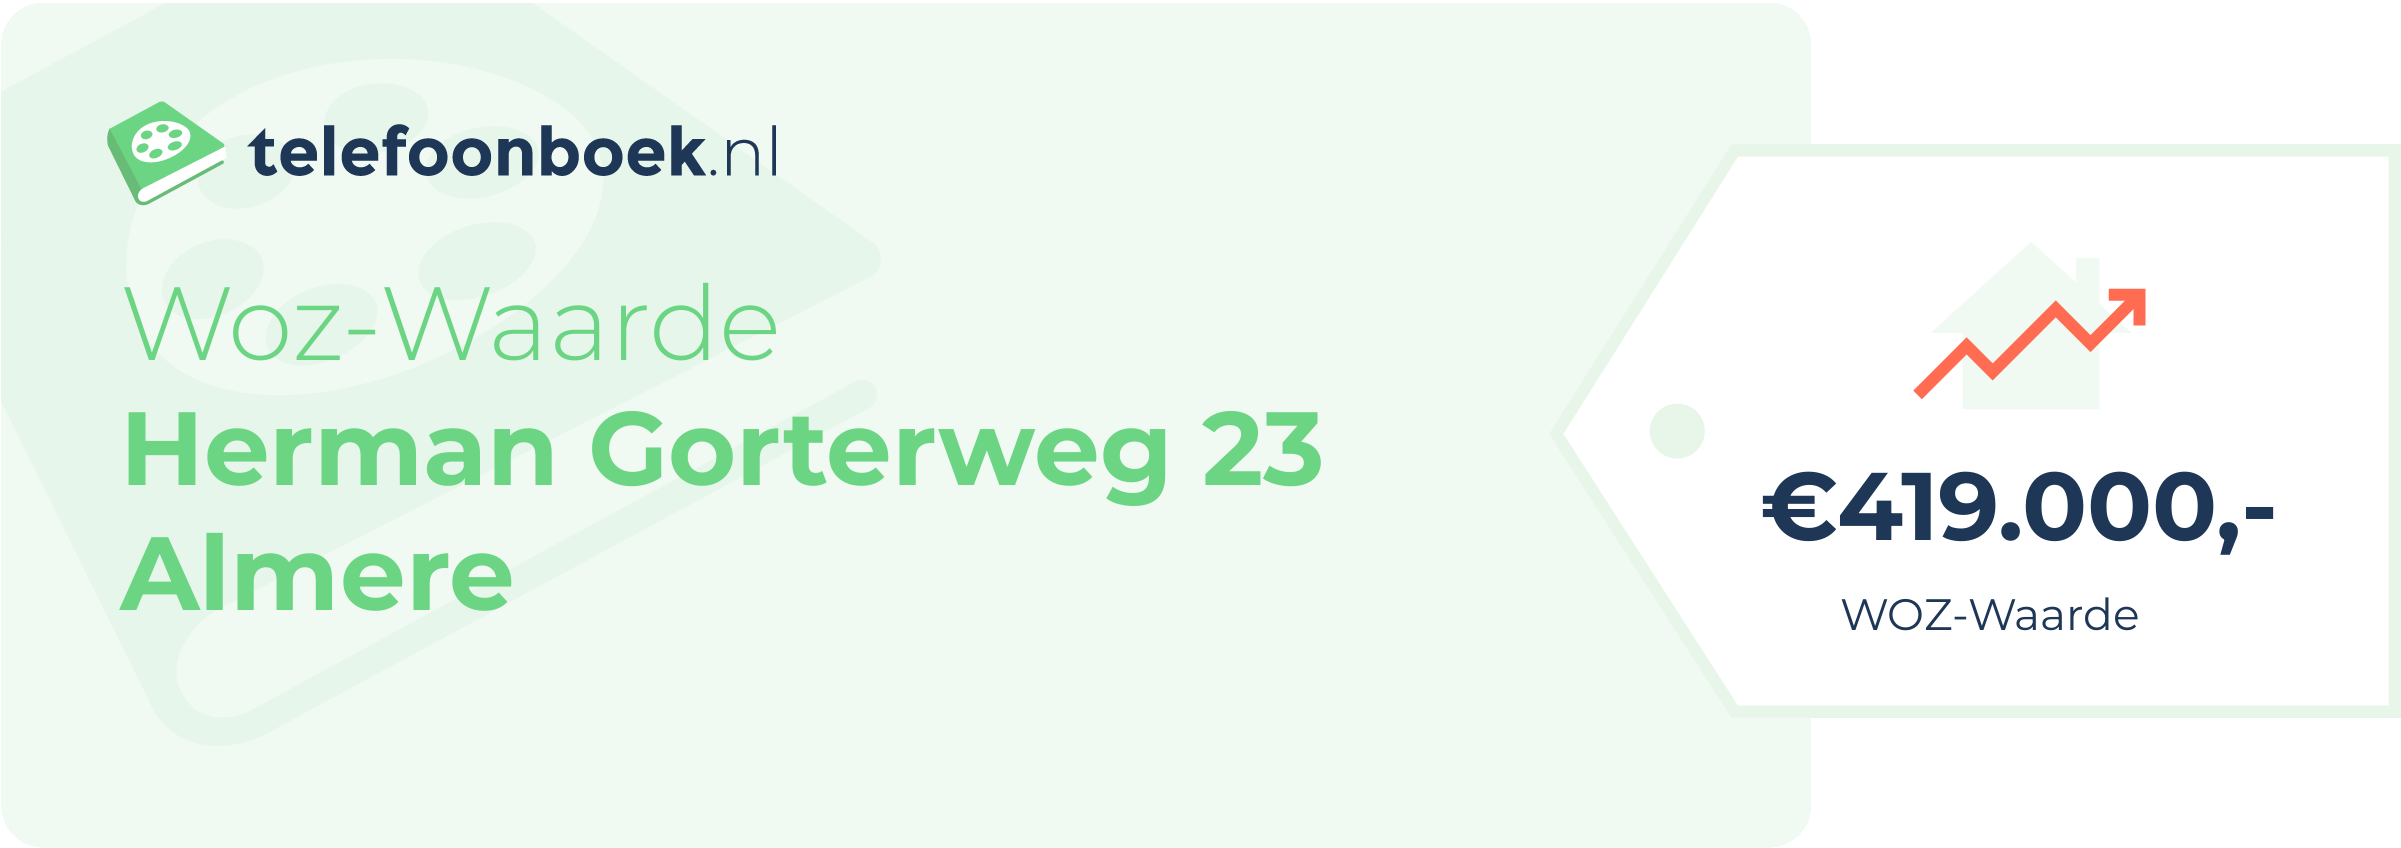 WOZ-waarde Herman Gorterweg 23 Almere